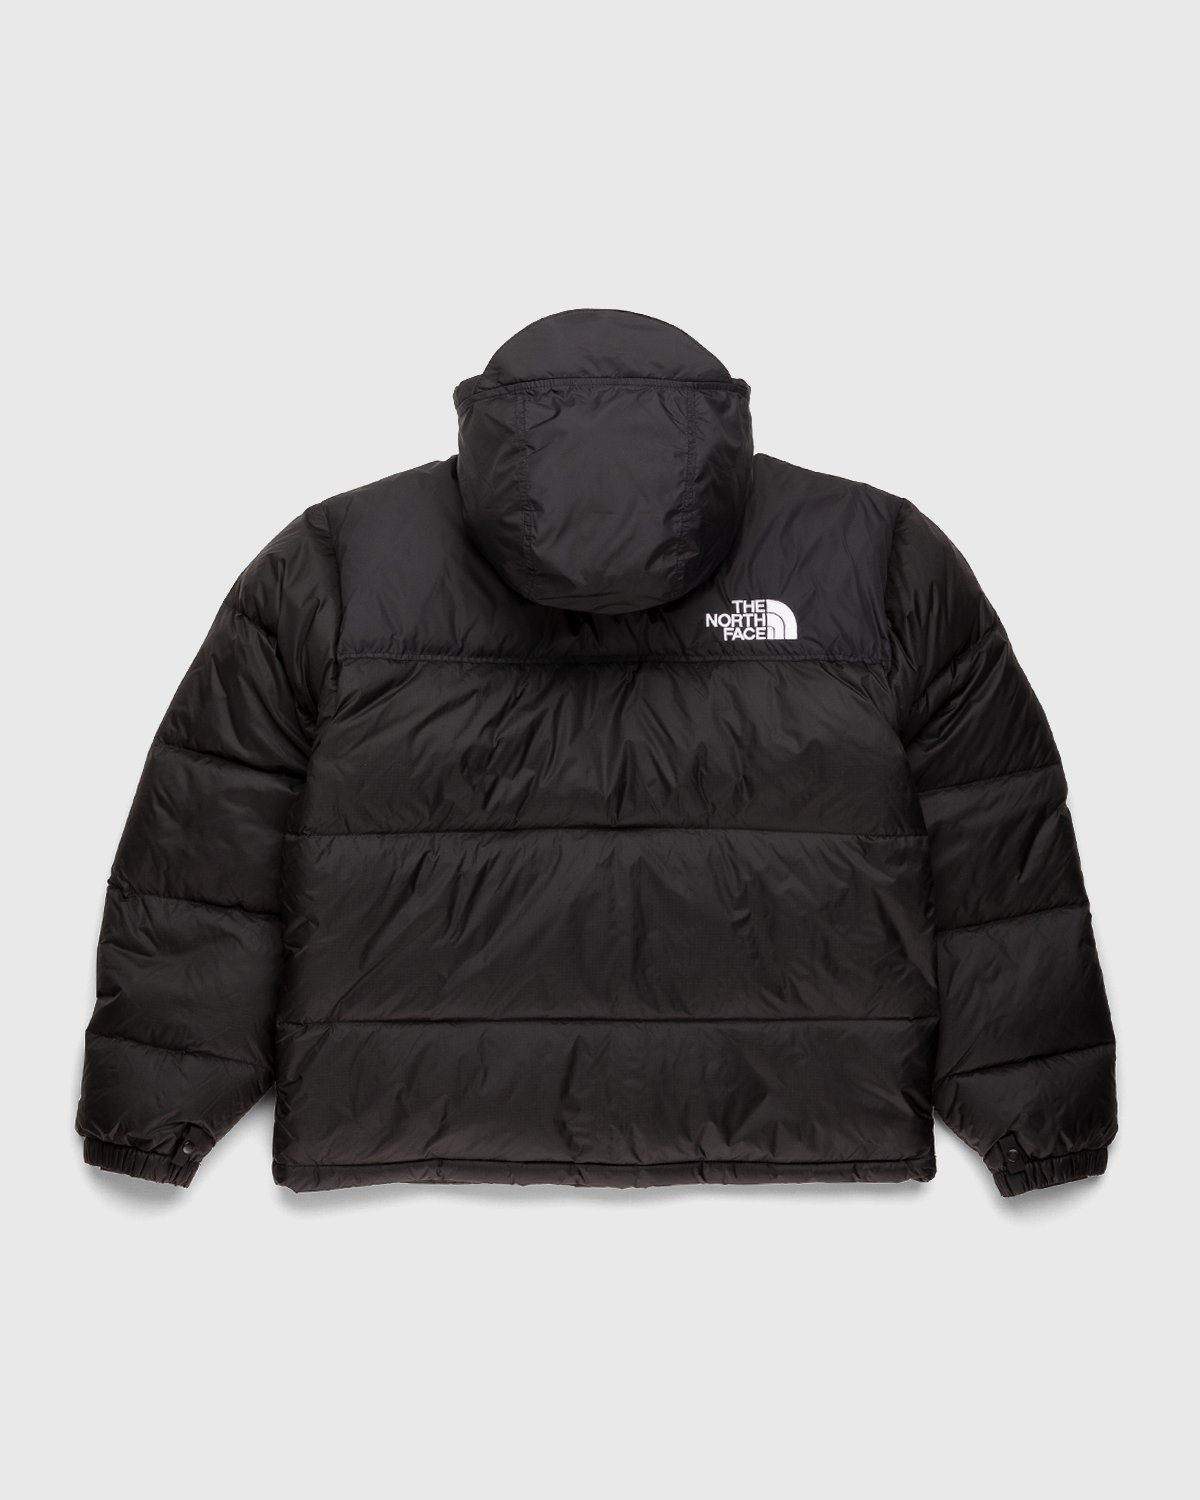 The North Face - 1996 Retro Nuptse Jacket Black - Clothing - Black - Image 3